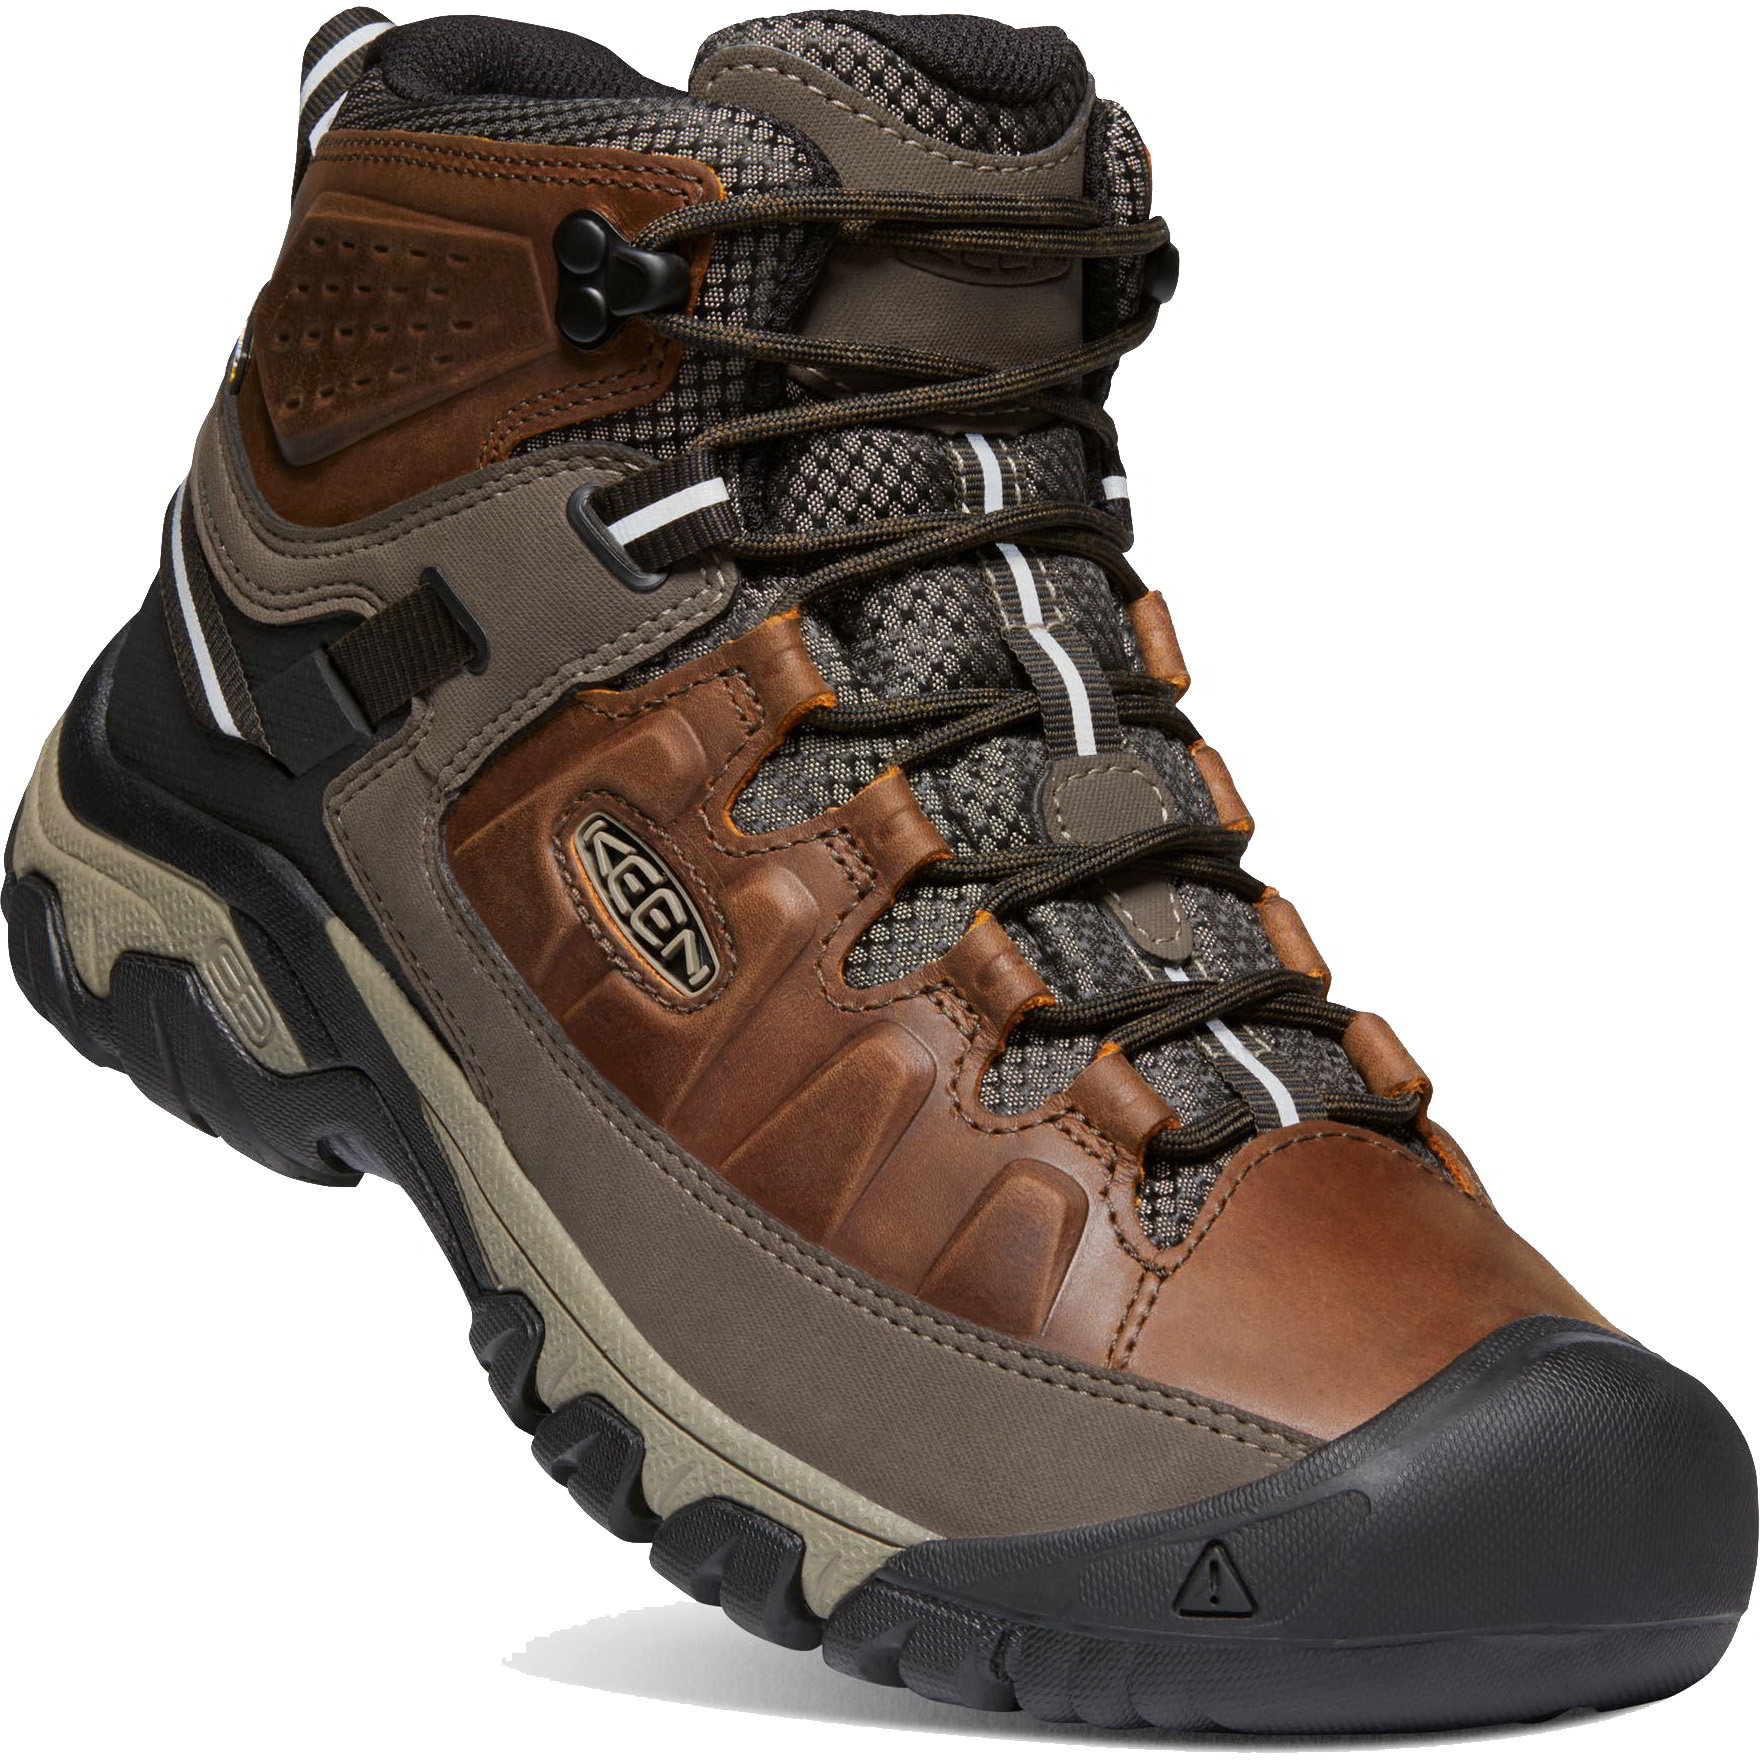 Keen Men's Targhee III Mid WP Waterproof Walking Hiking Boots - UK 11 / EU 46 / US 12